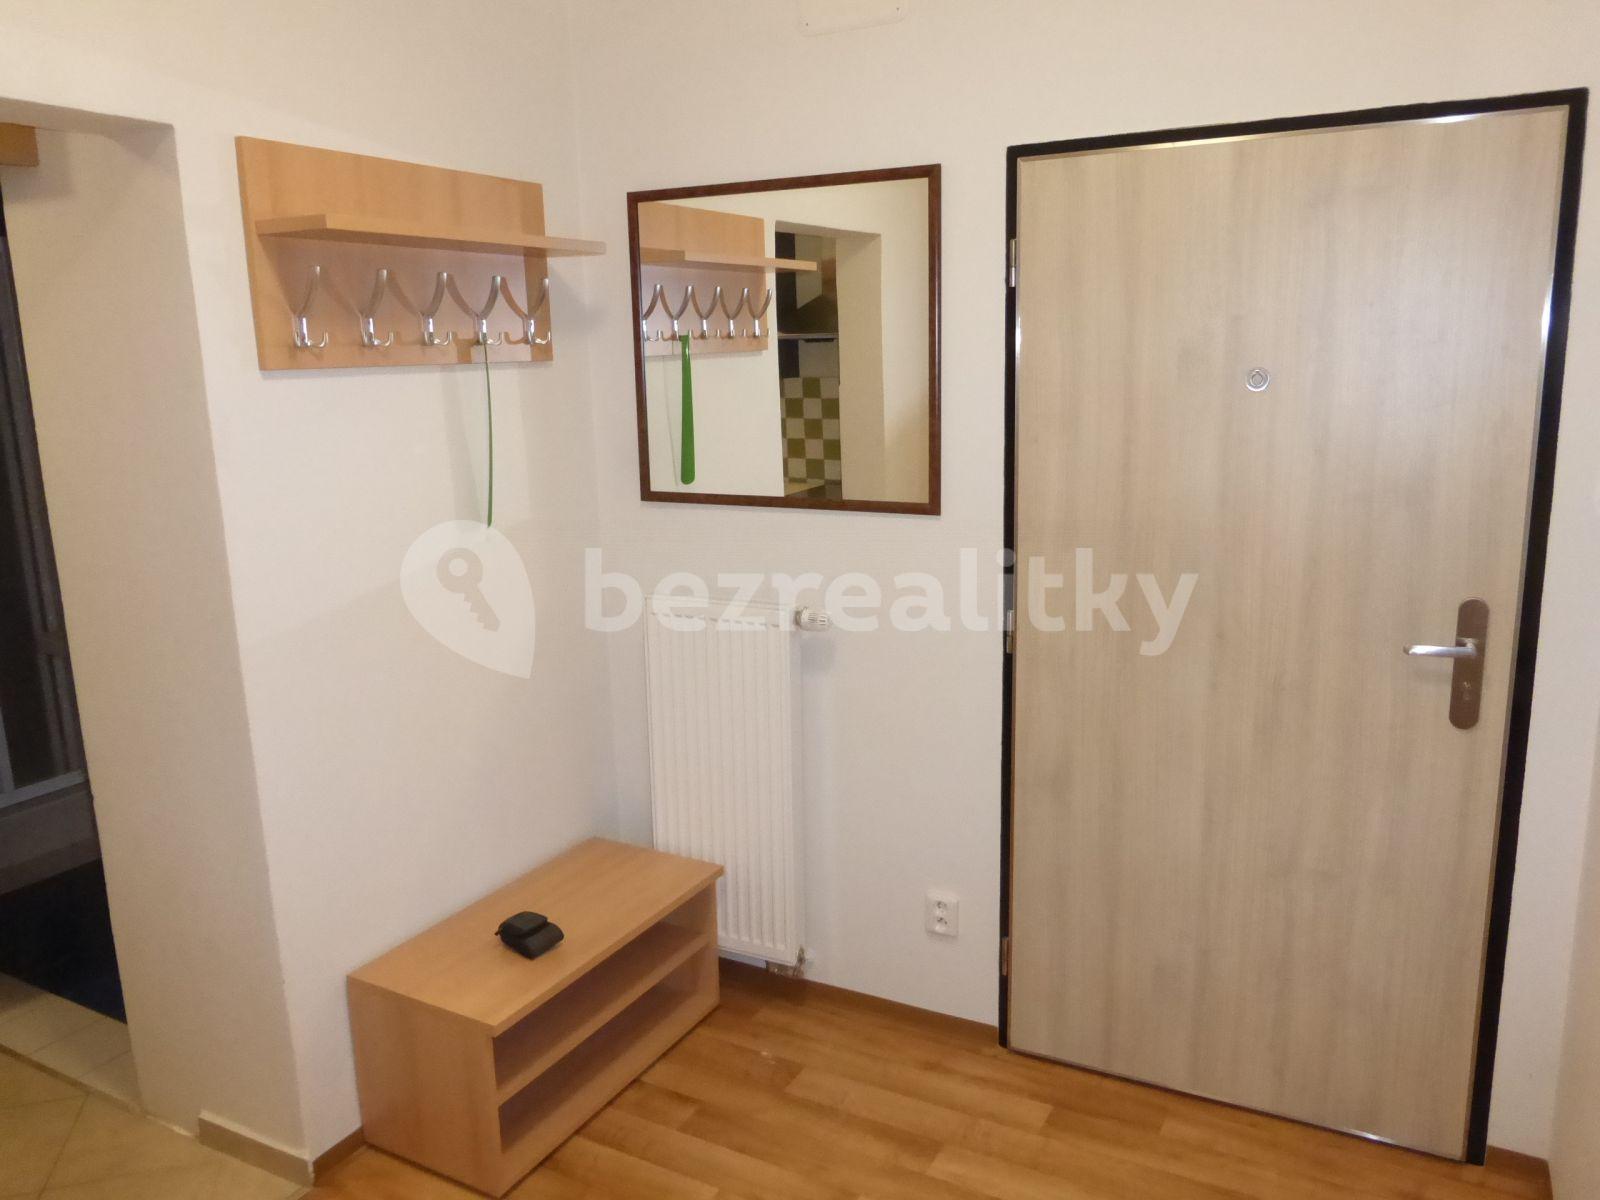 2 bedroom flat to rent, 44 m², Prague, Prague